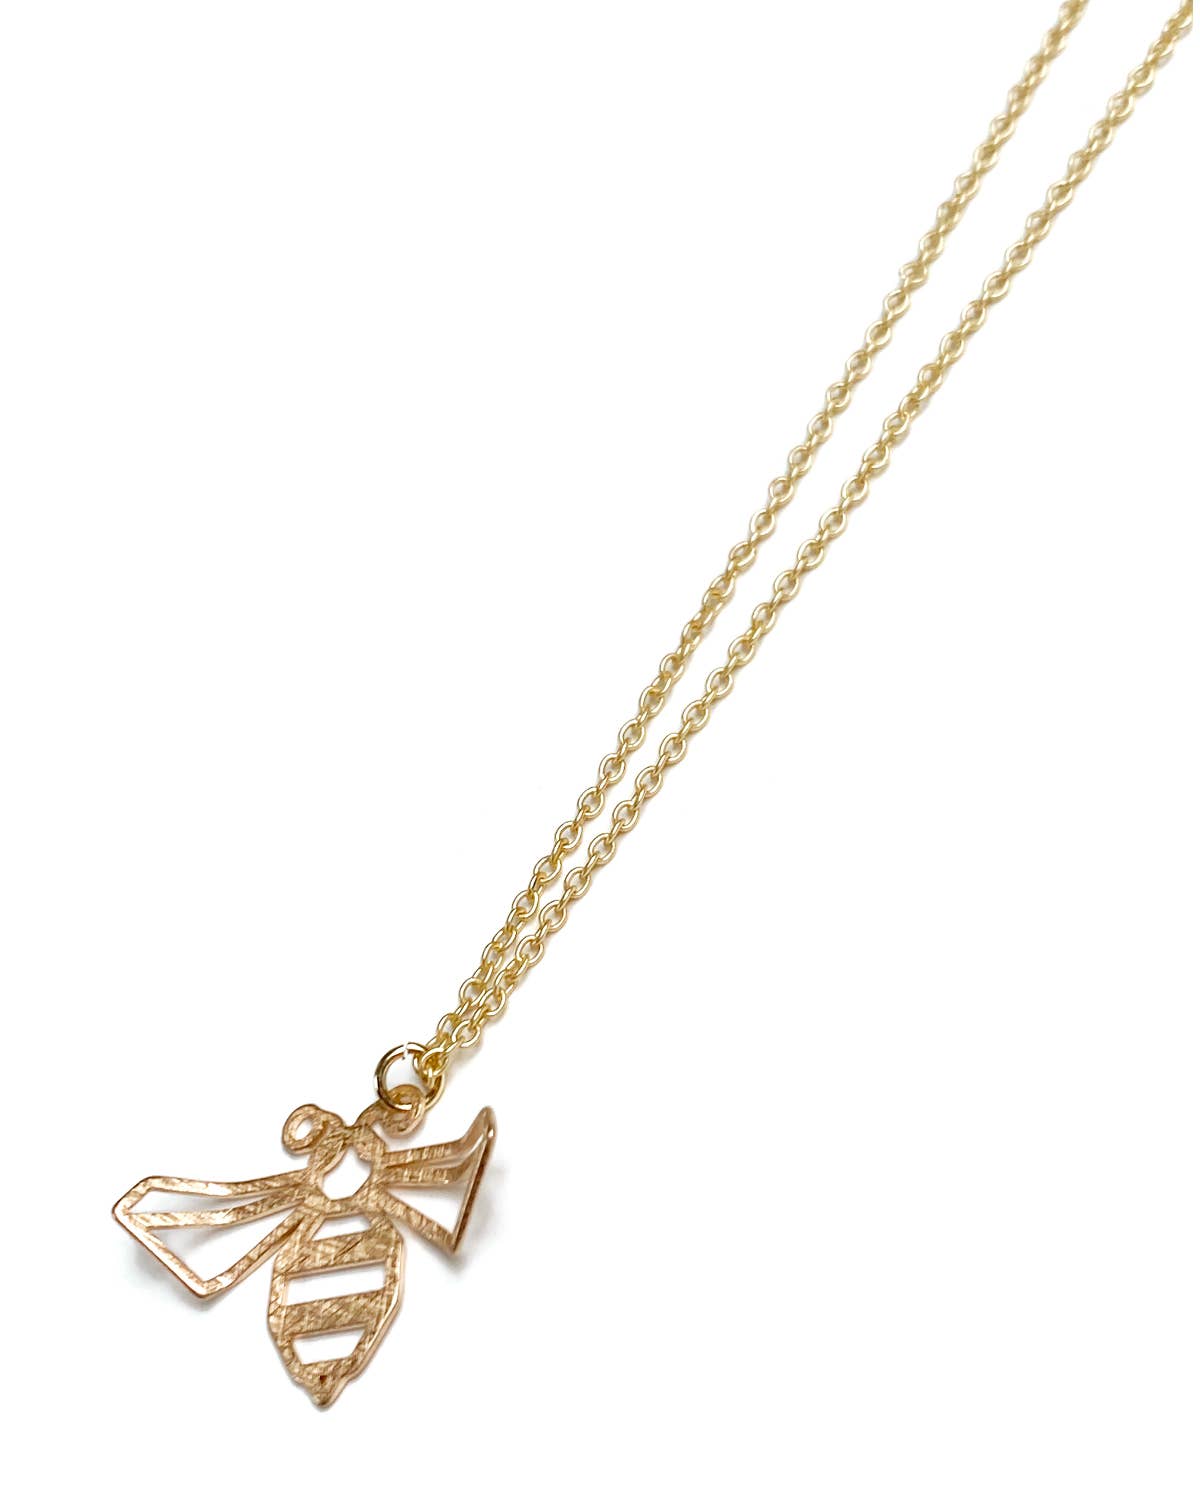 Gracie Rose Designs - Matte Gold Bumble Bee Charm Pendant Necklace